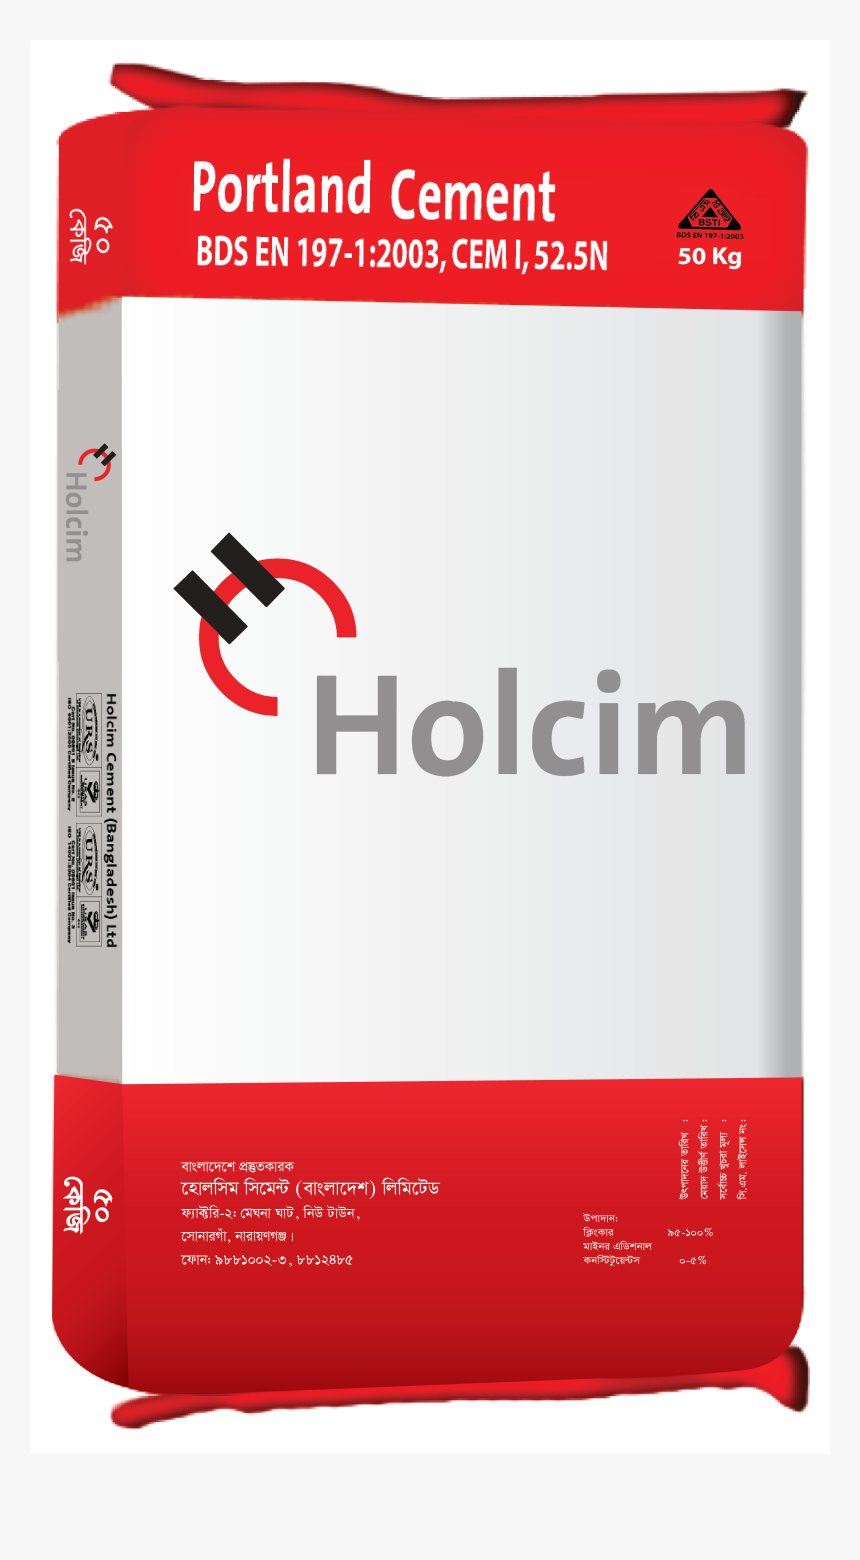 Holcim Red Pack01 - Holcim Cement Bangladesh Price, HD Png Download, Free Download